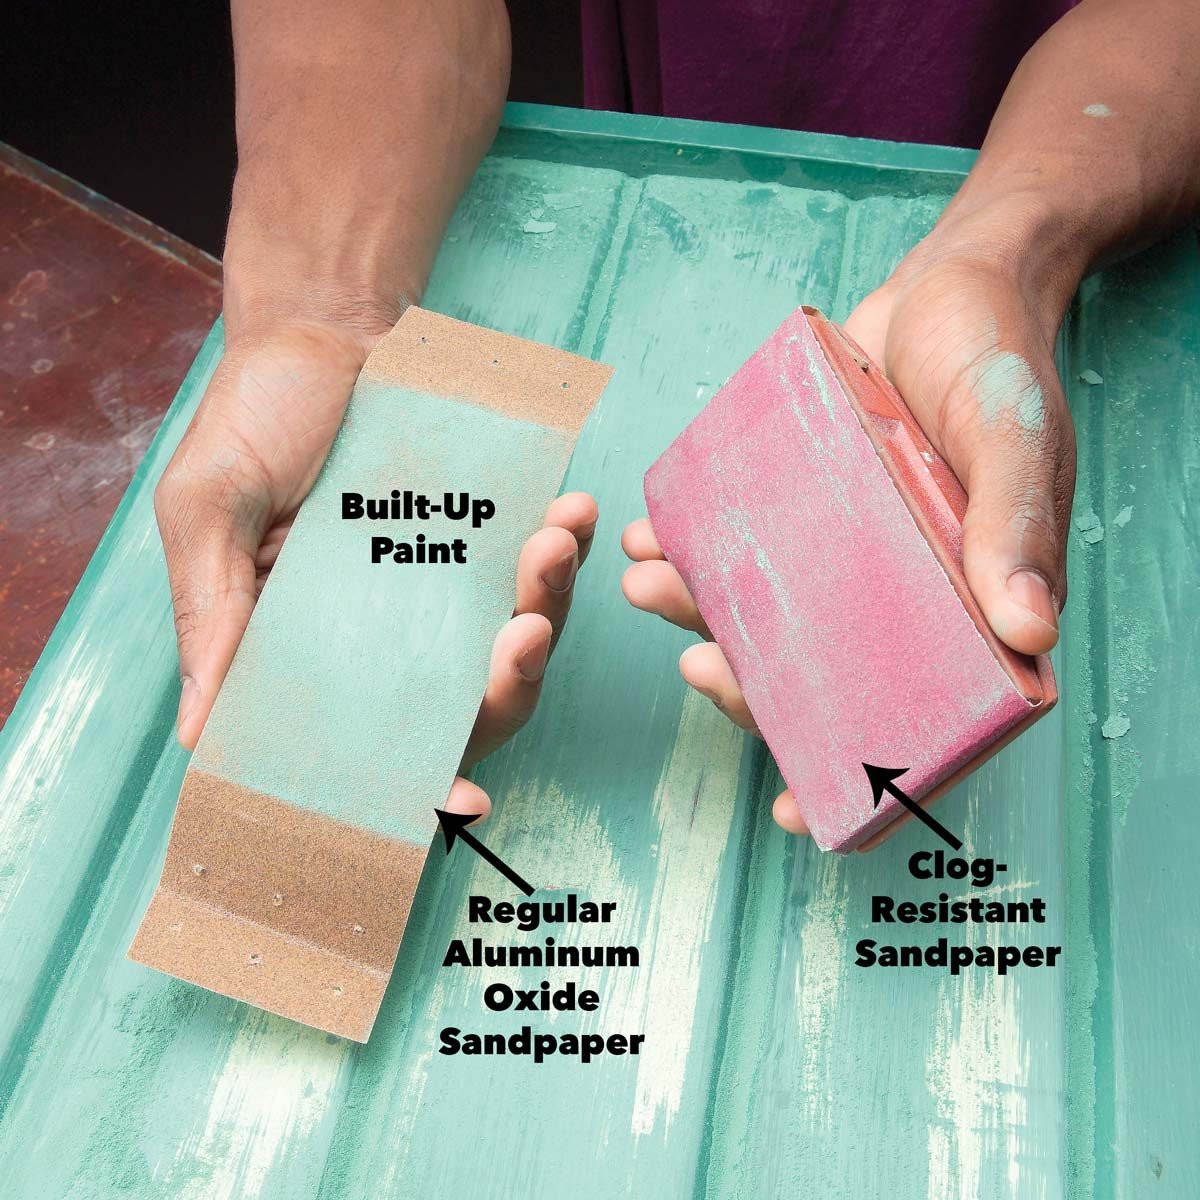 Clog resistant sandpaper